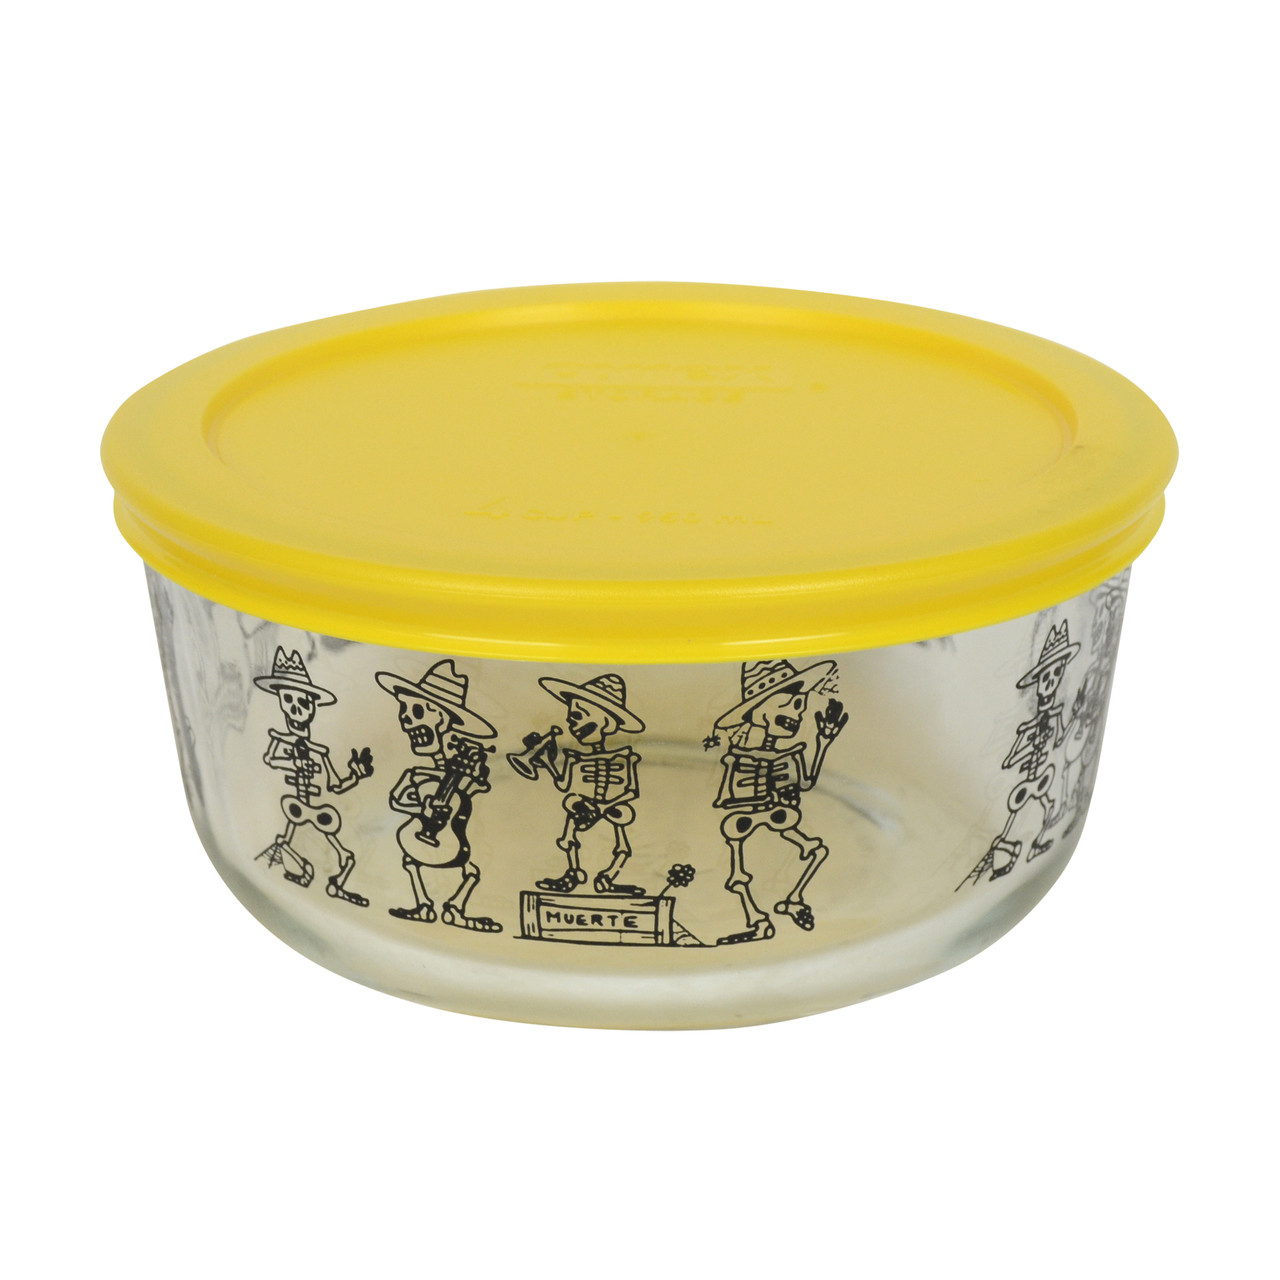 Pyrex (2) 7201 4-Cup Glass Food Storage Bowls and (2) 7201-PC Meyer Lemon  Yellow Plastic Lids 